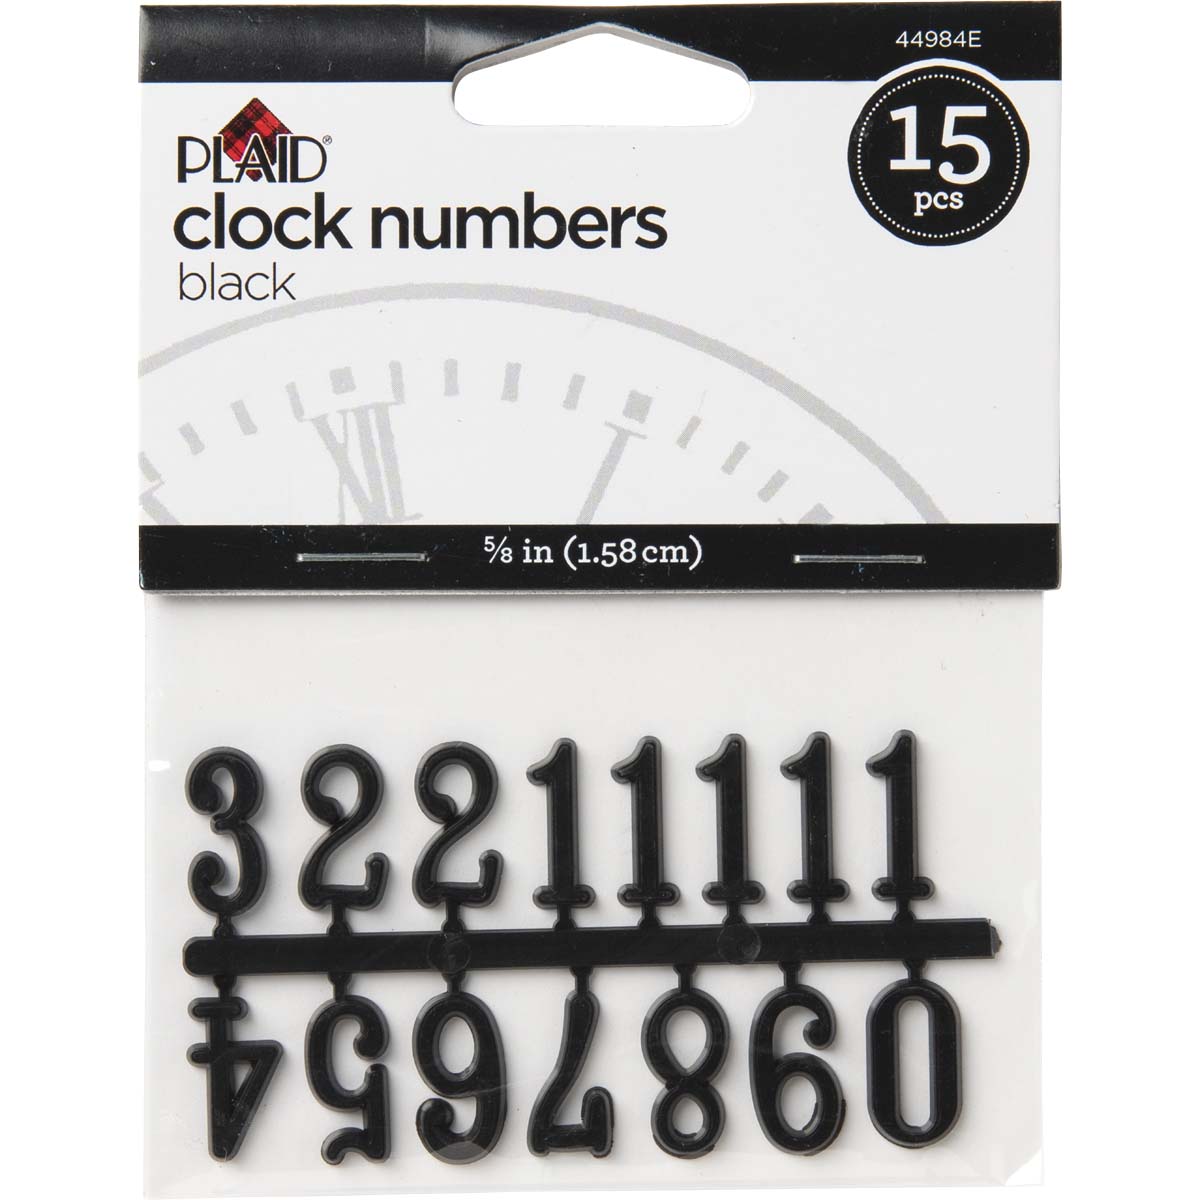 Plaid ® Accessories - Clock Numbers - Black, 5/8